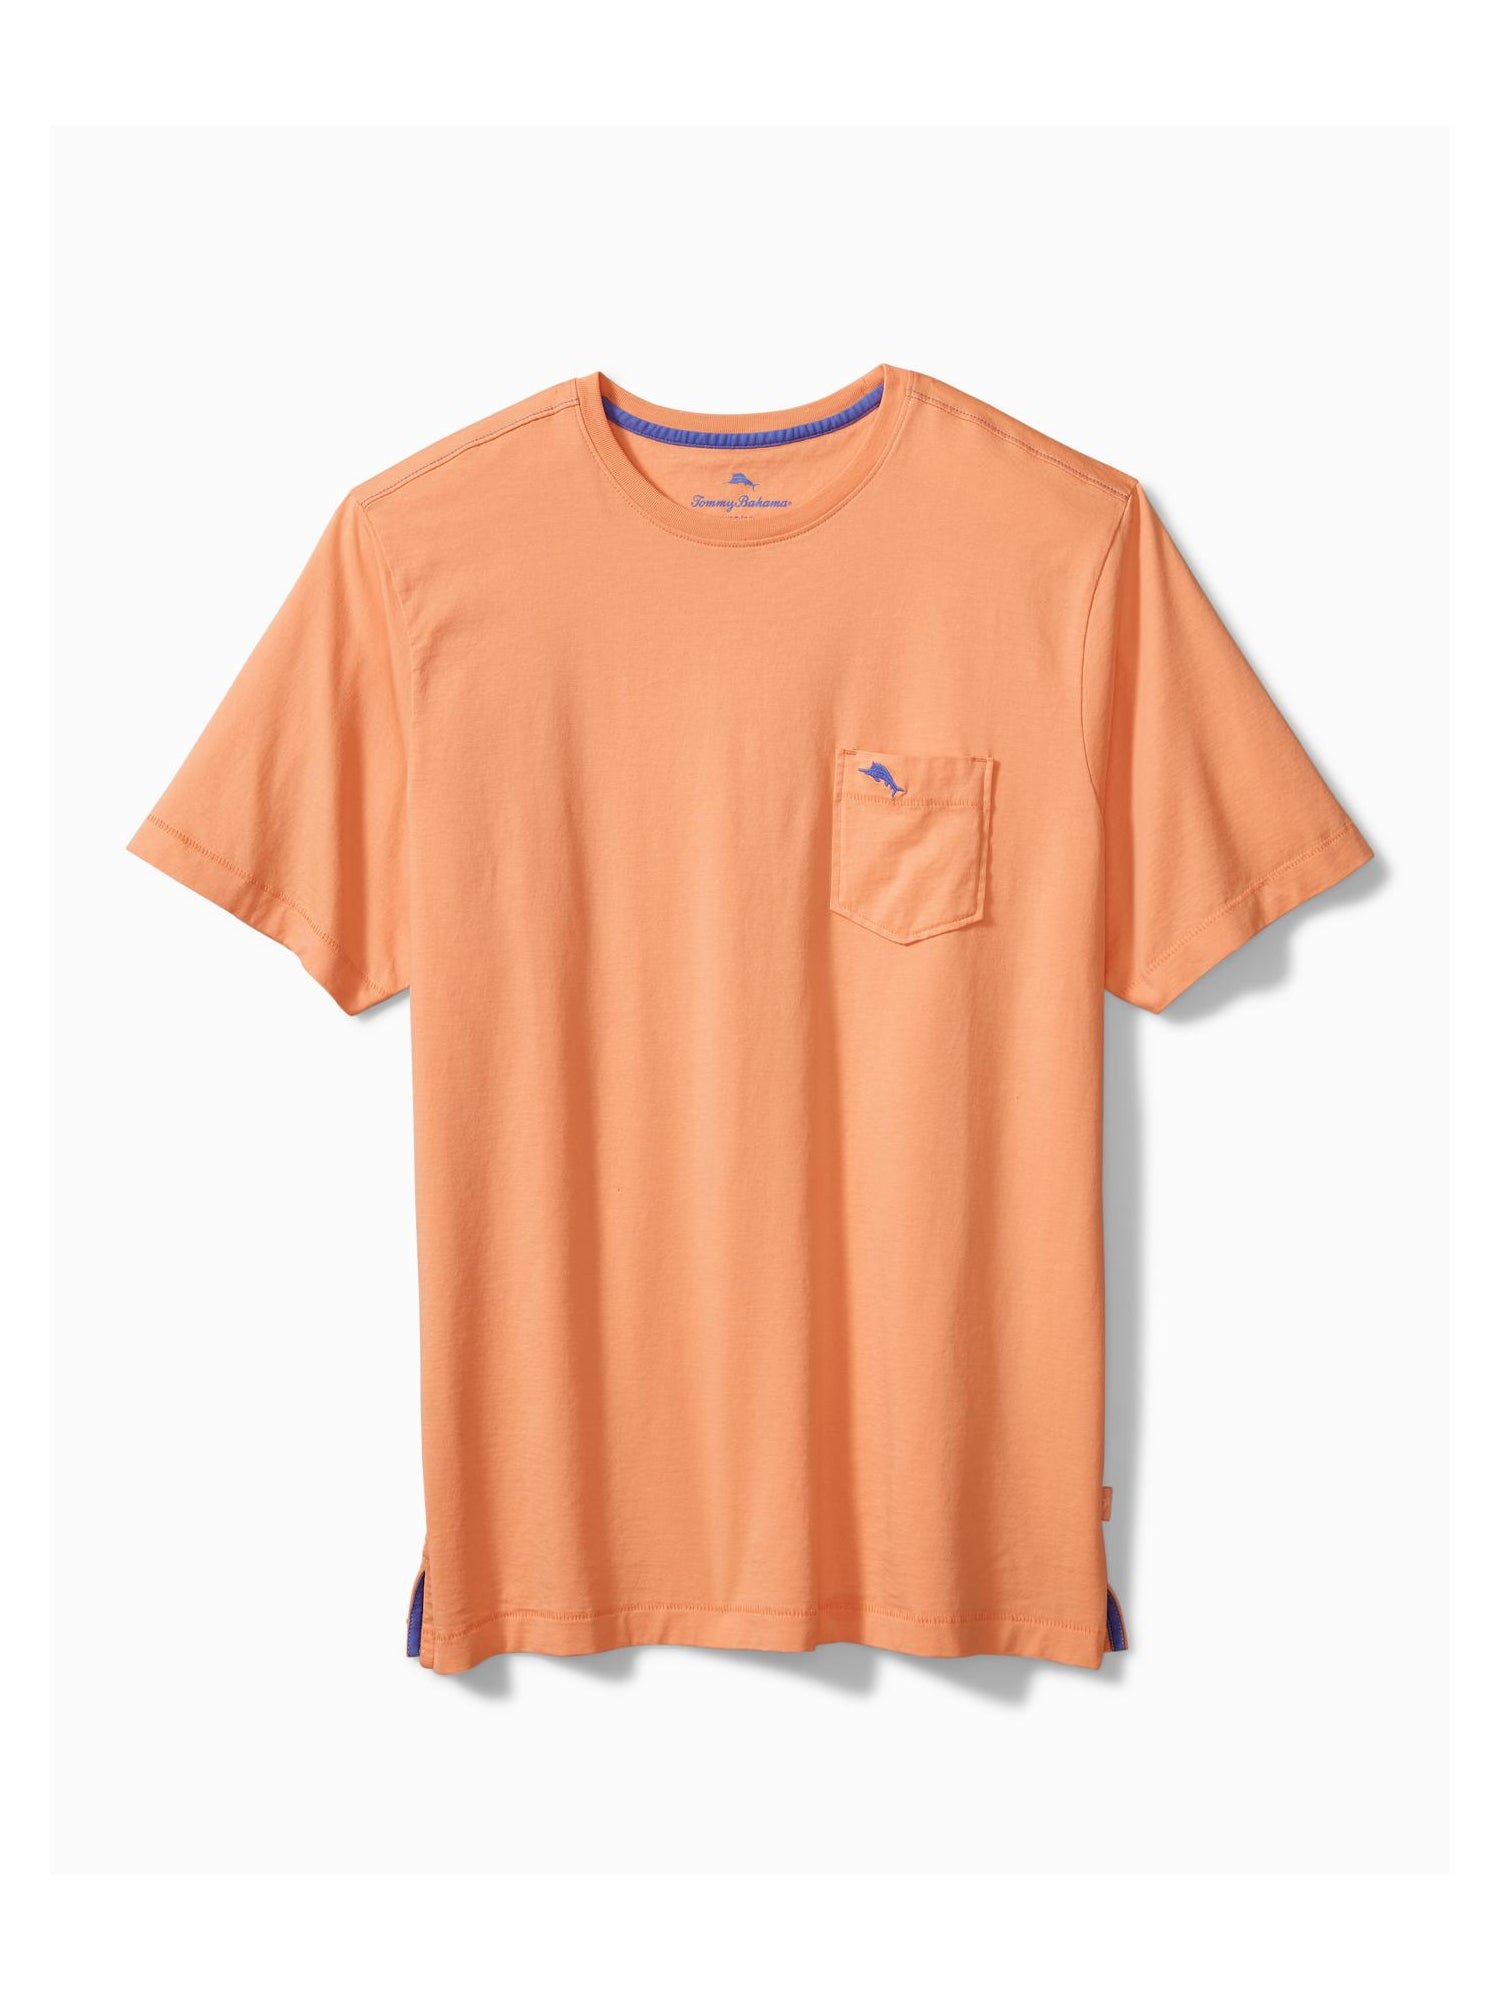 Tommy Bahama Men's Bali Skyline T-Shirt - Fresh Start Orange - Size 3XL